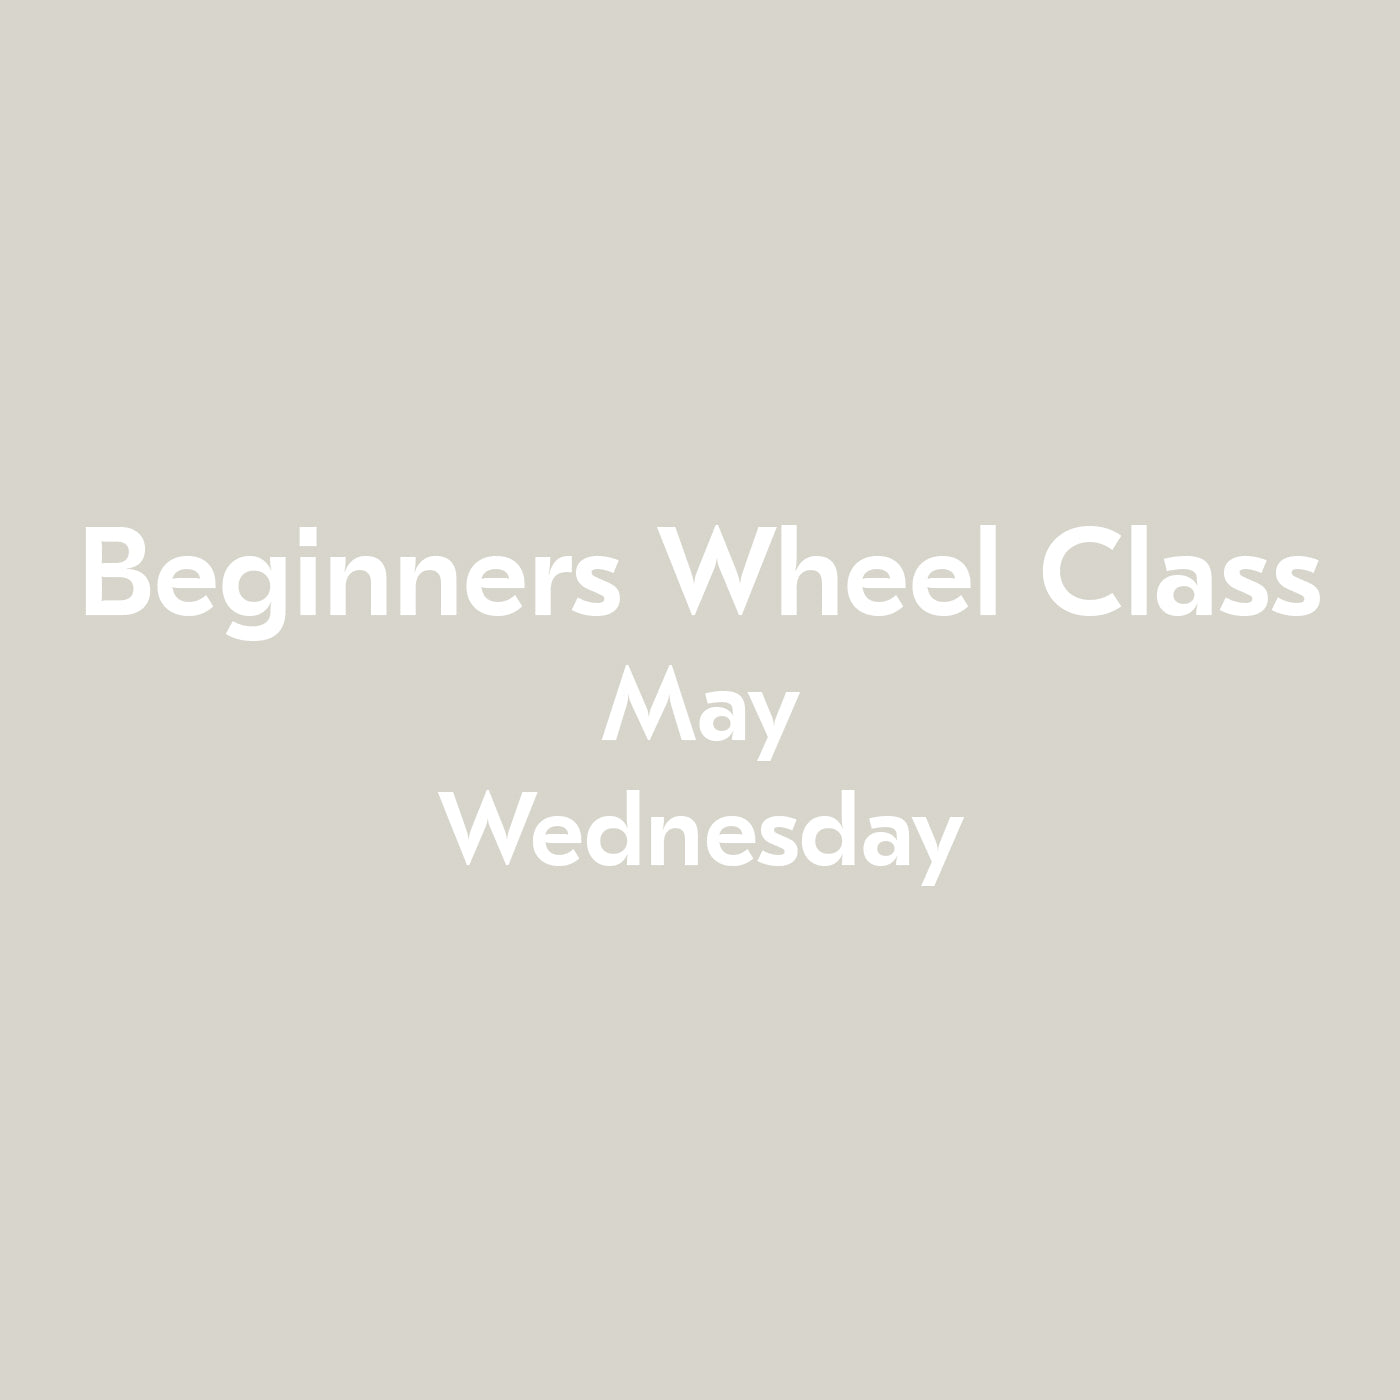 Beginners Wheel Class May Wednesday Event